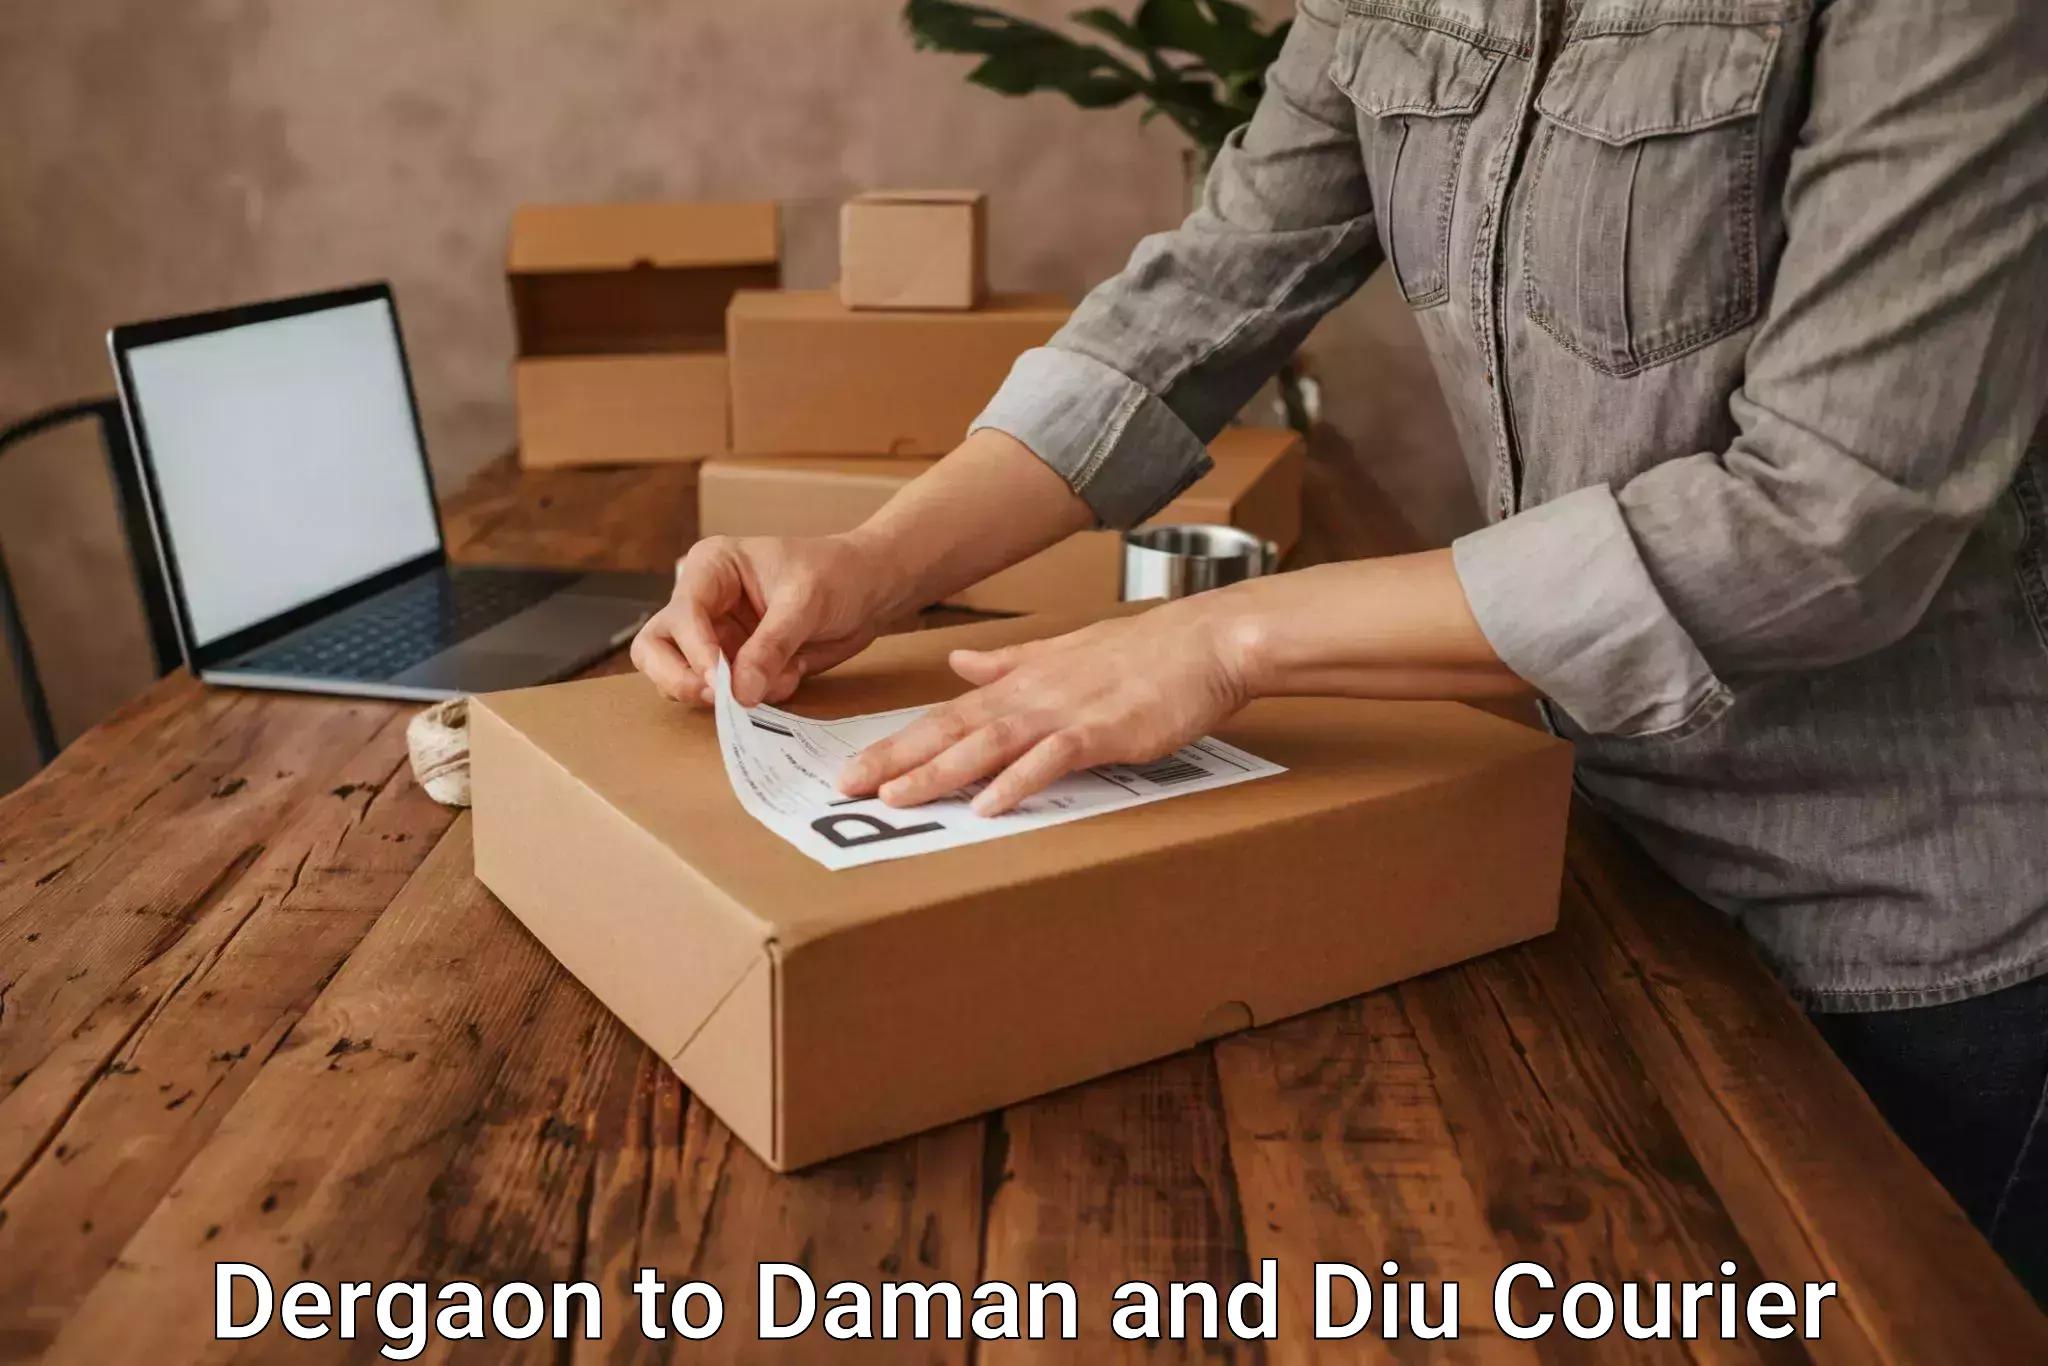 Efficient parcel service Dergaon to Diu